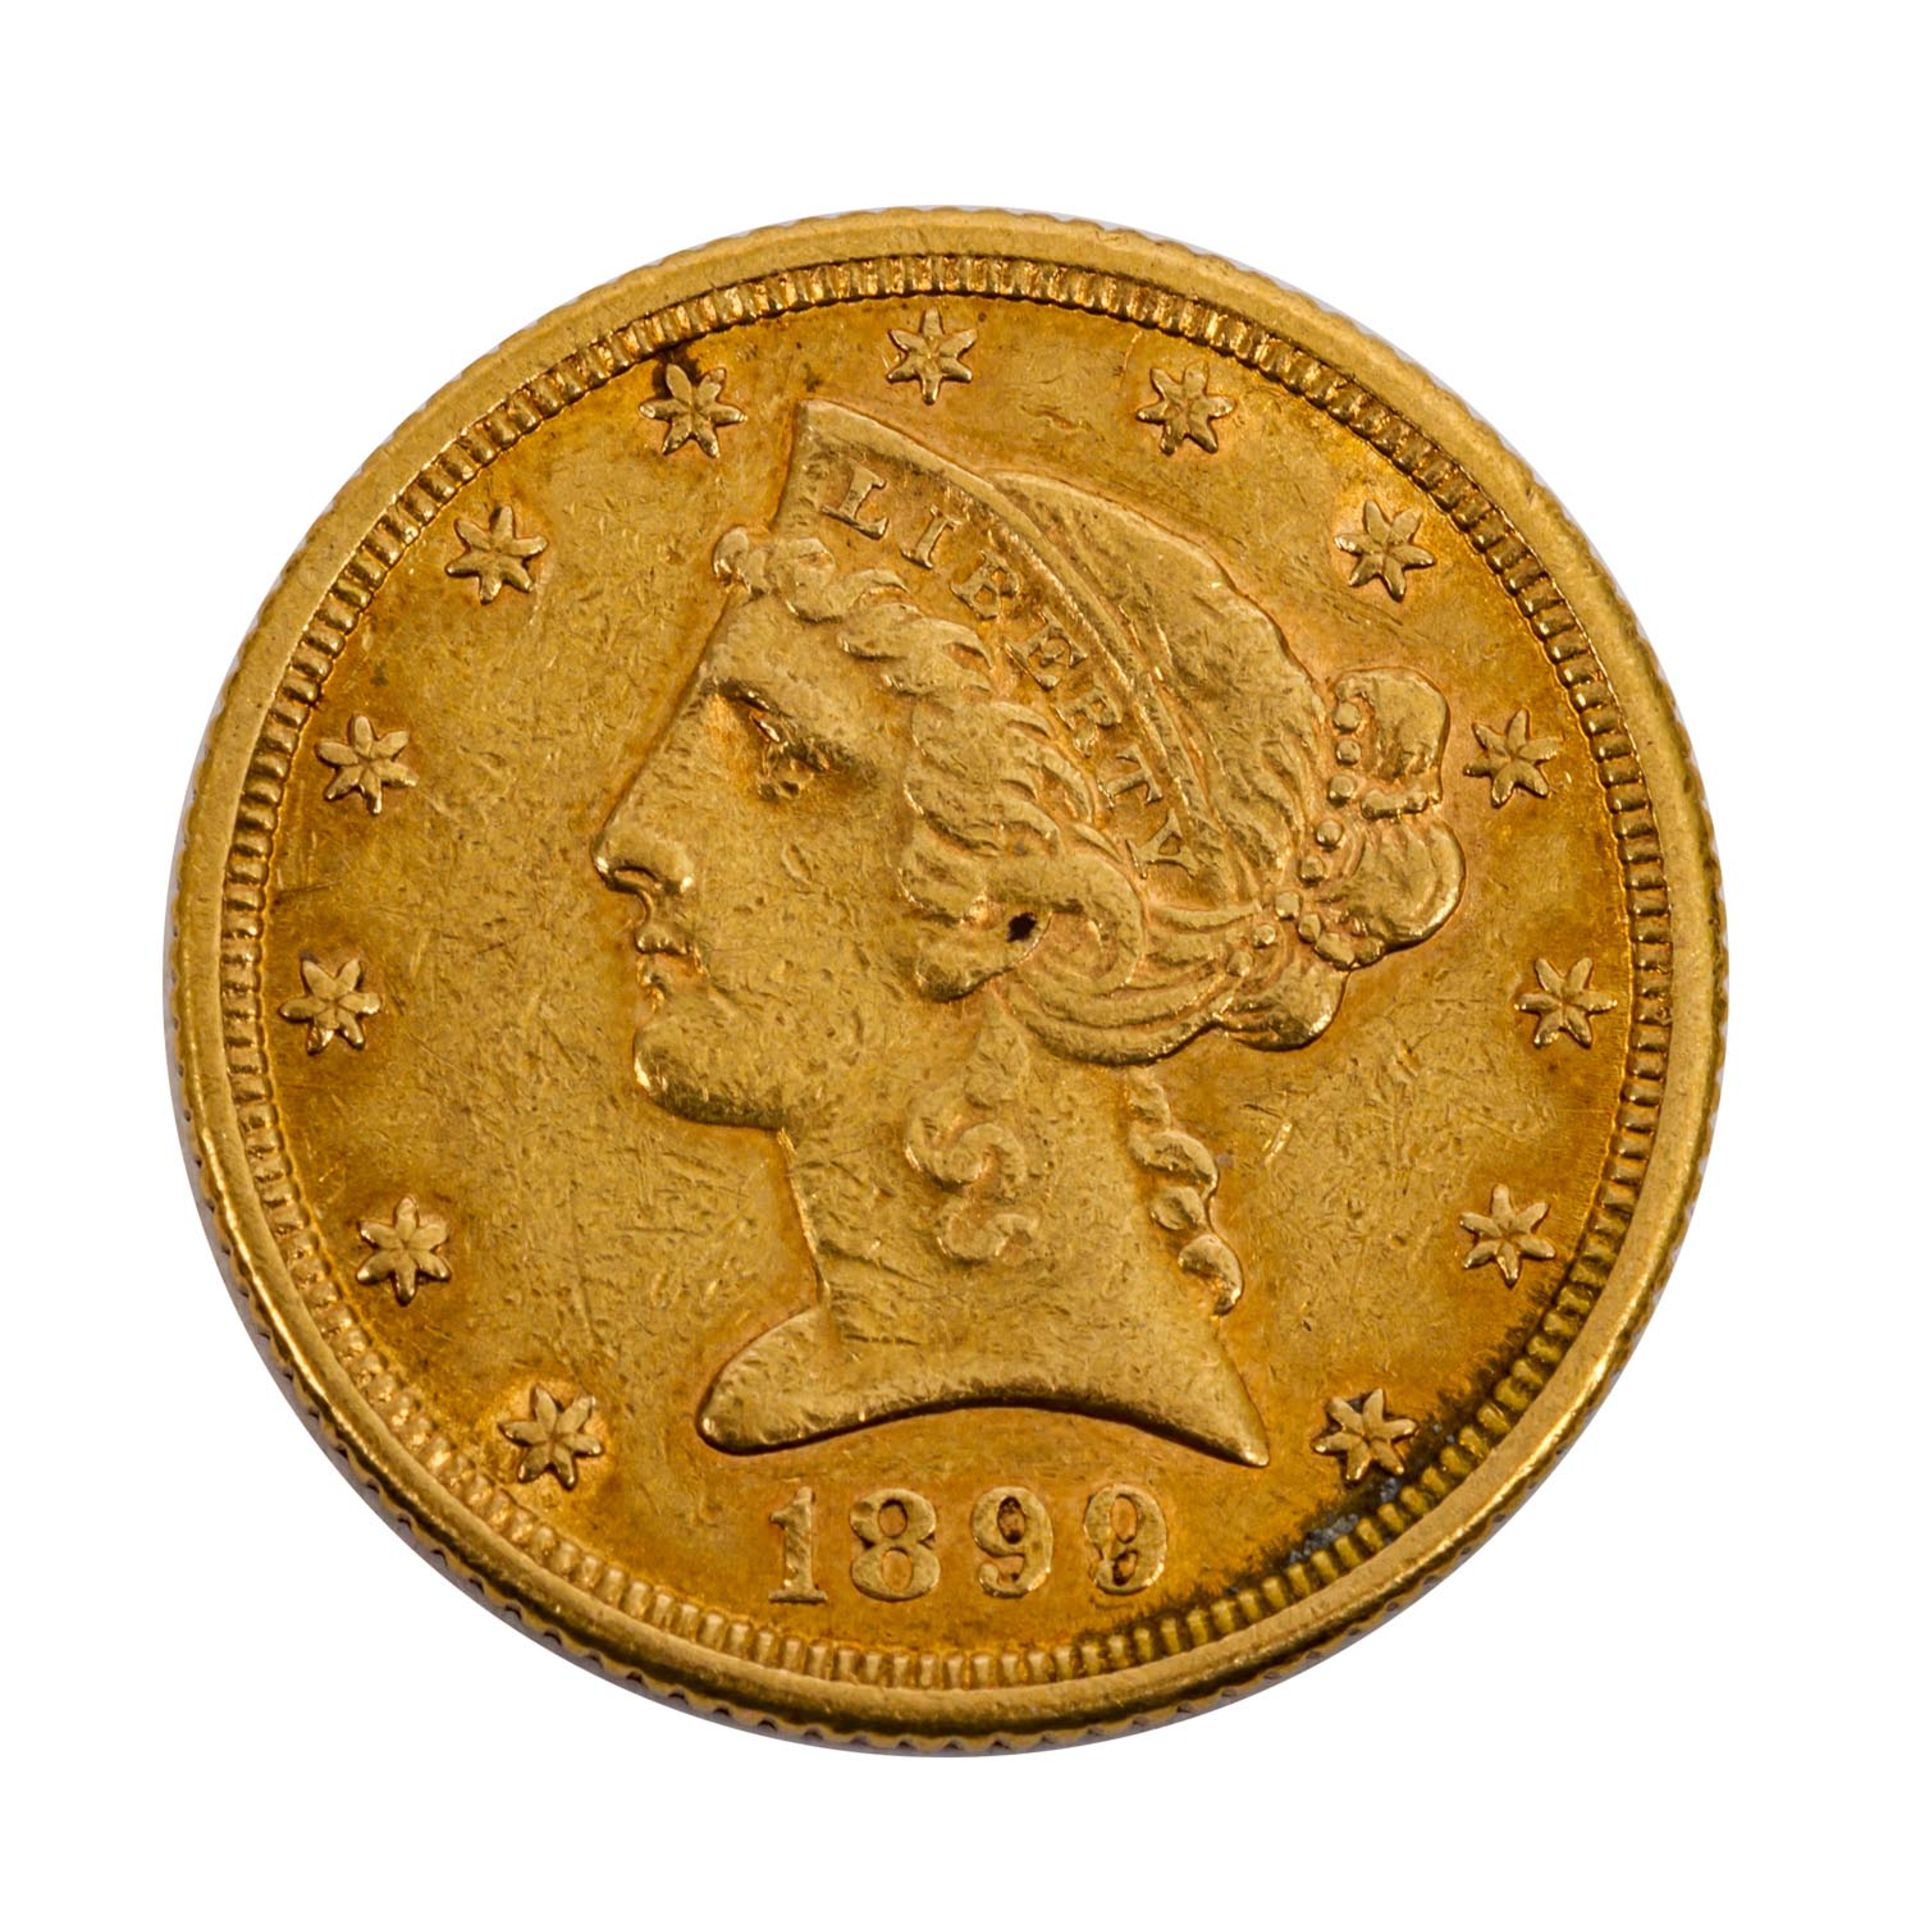 USA/GOLD - 5 Dollars 1899 S, Liberty Head, ca. 7,5 g fein, ss USA/GOLD - 5 dollars 1899 S, Liberty